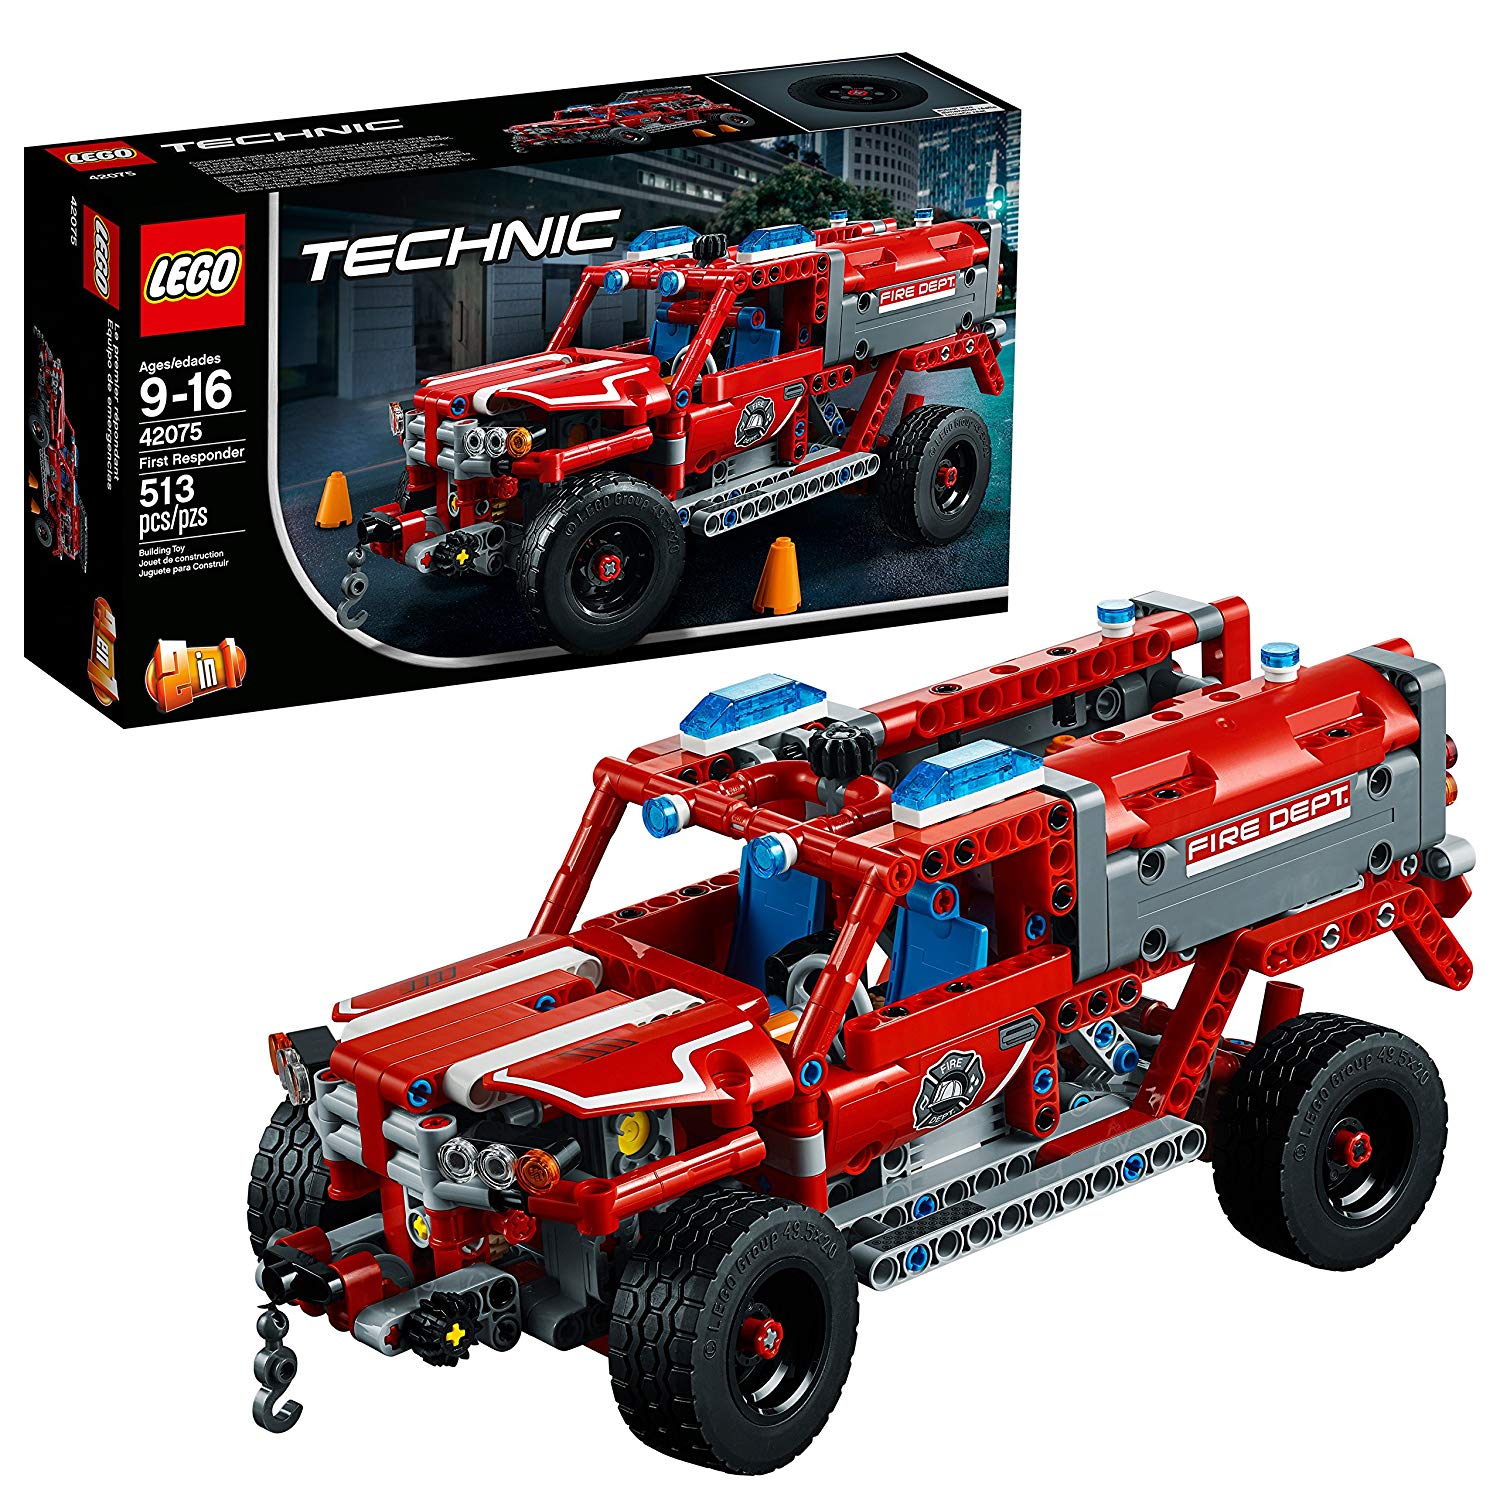 Lego Technic First Responder Building Kit